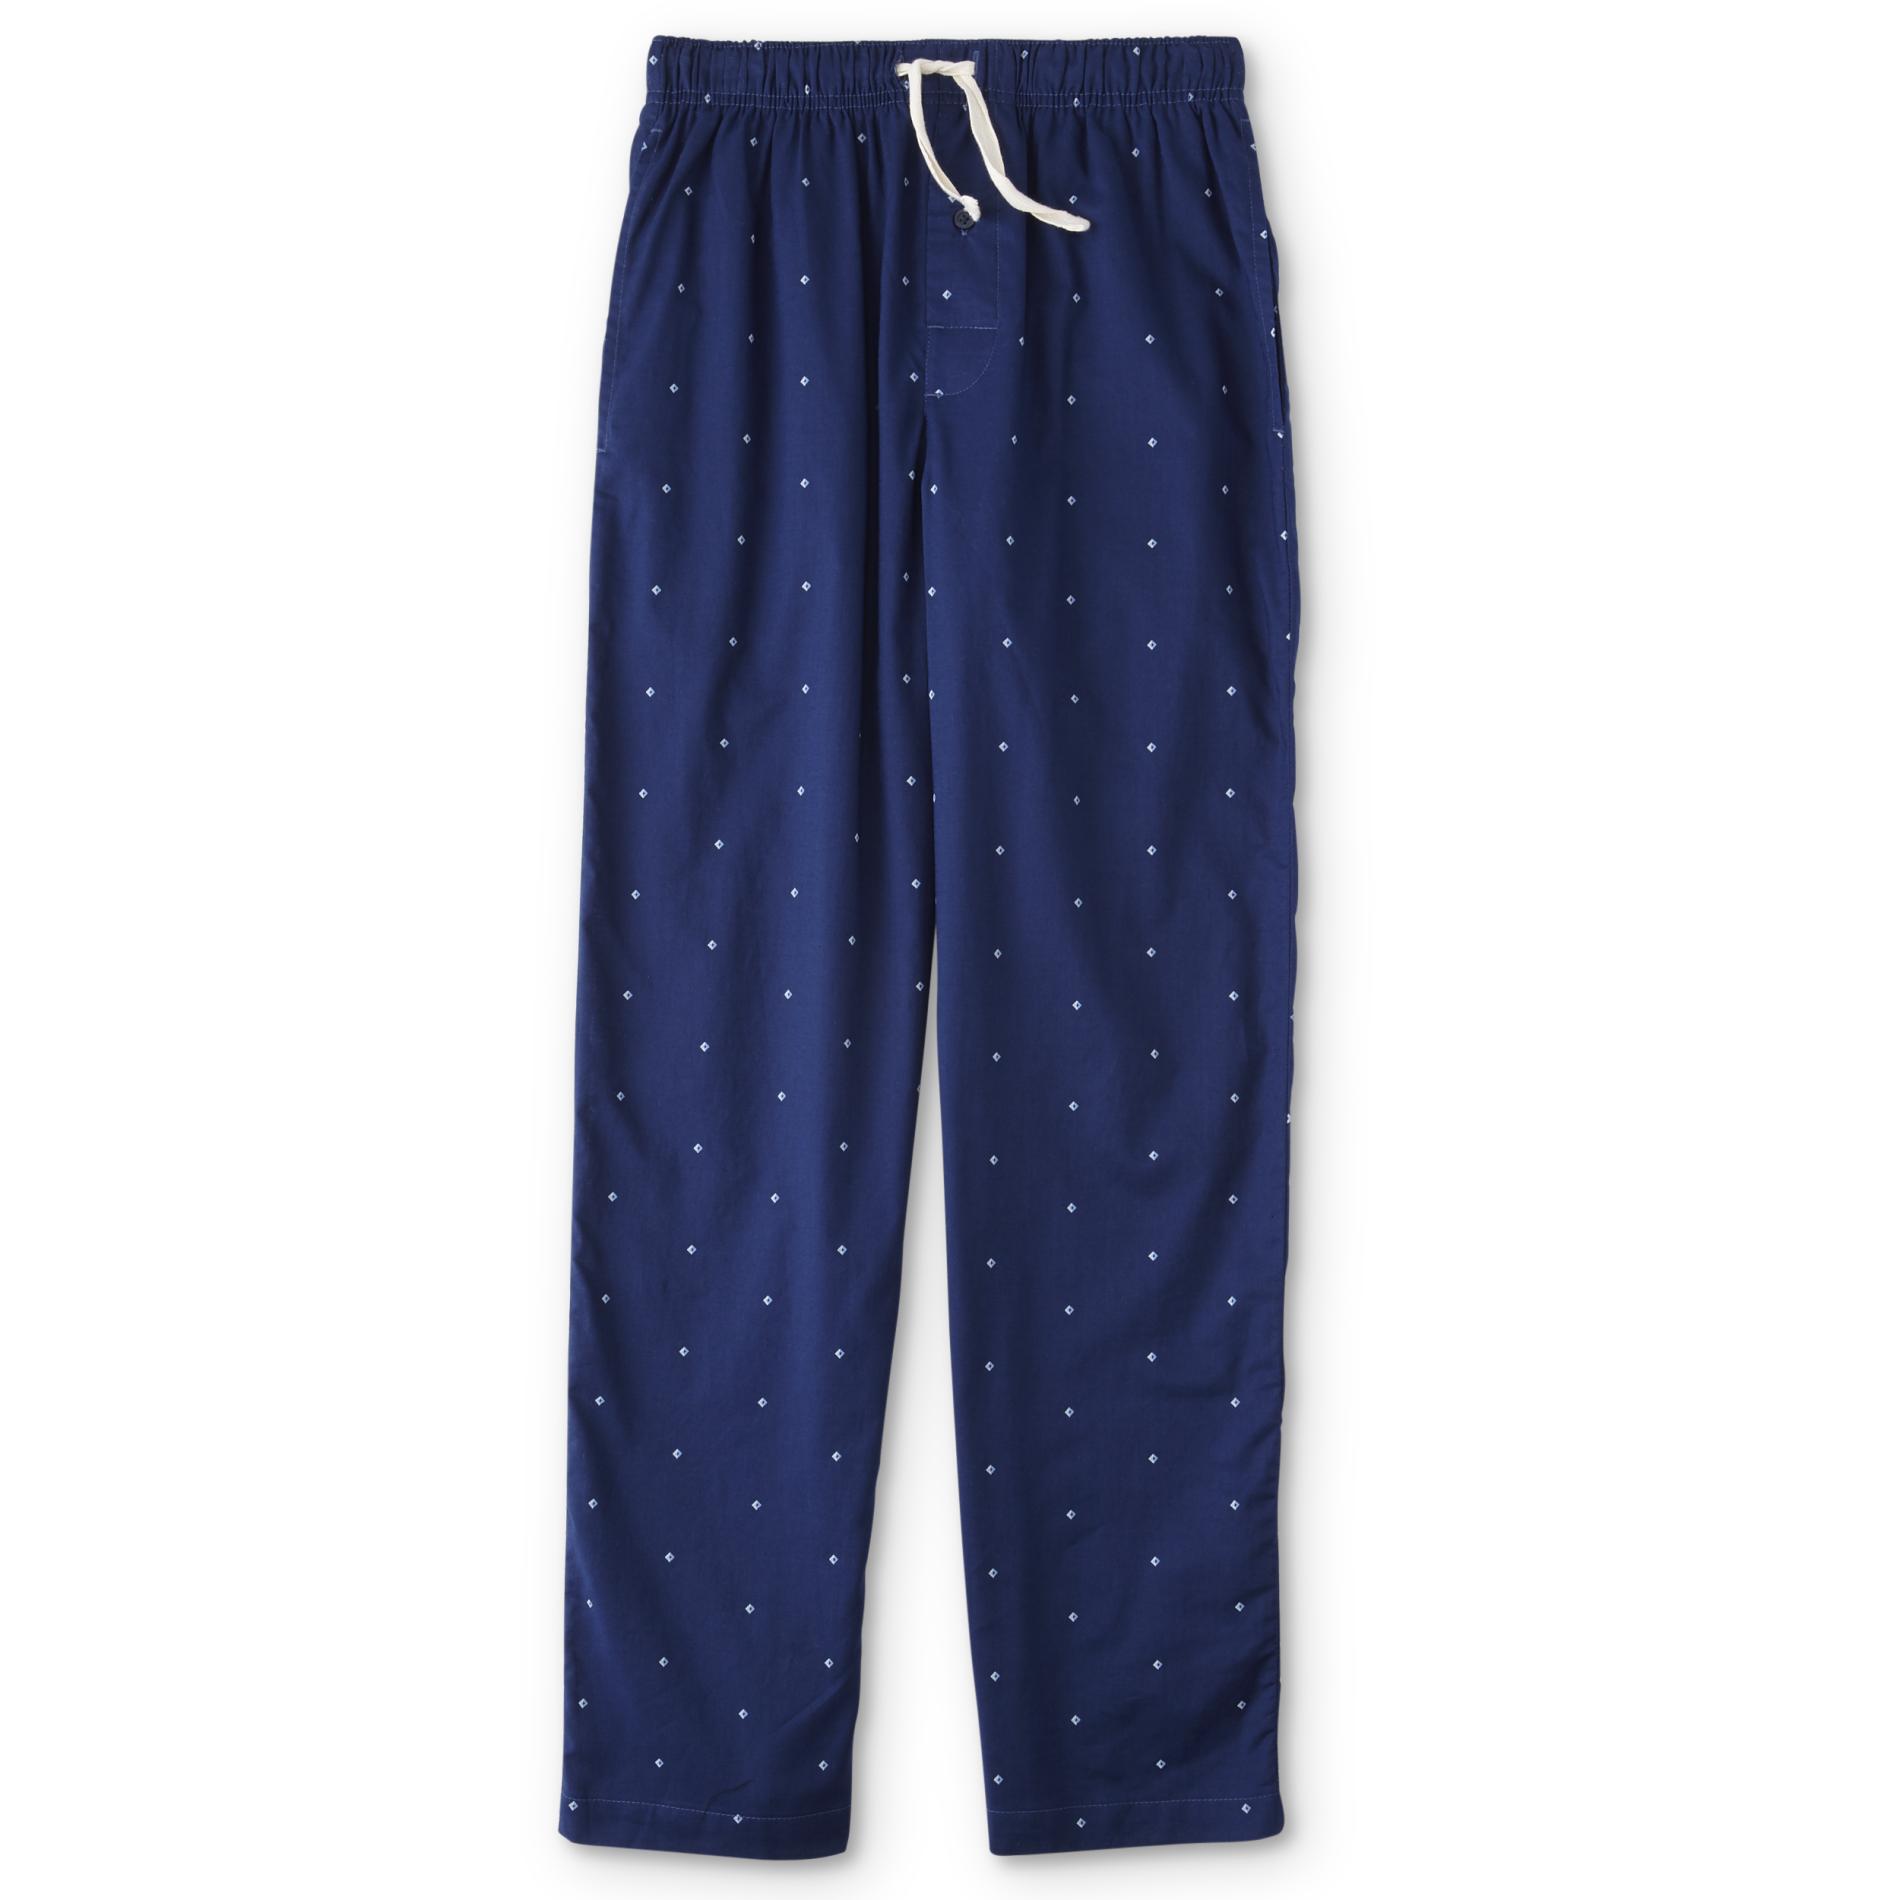 Basic Editions Men's Pajama Pants - Diamonds